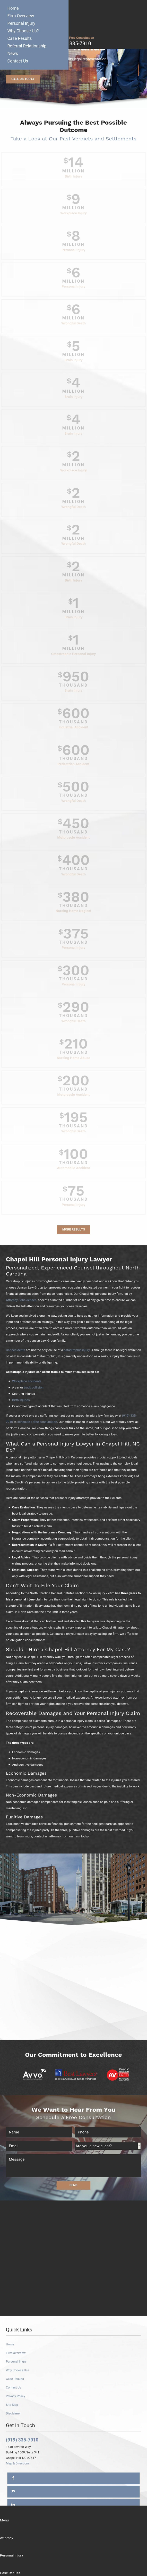 Jensen Law Group - Chapel Hill NC Lawyers